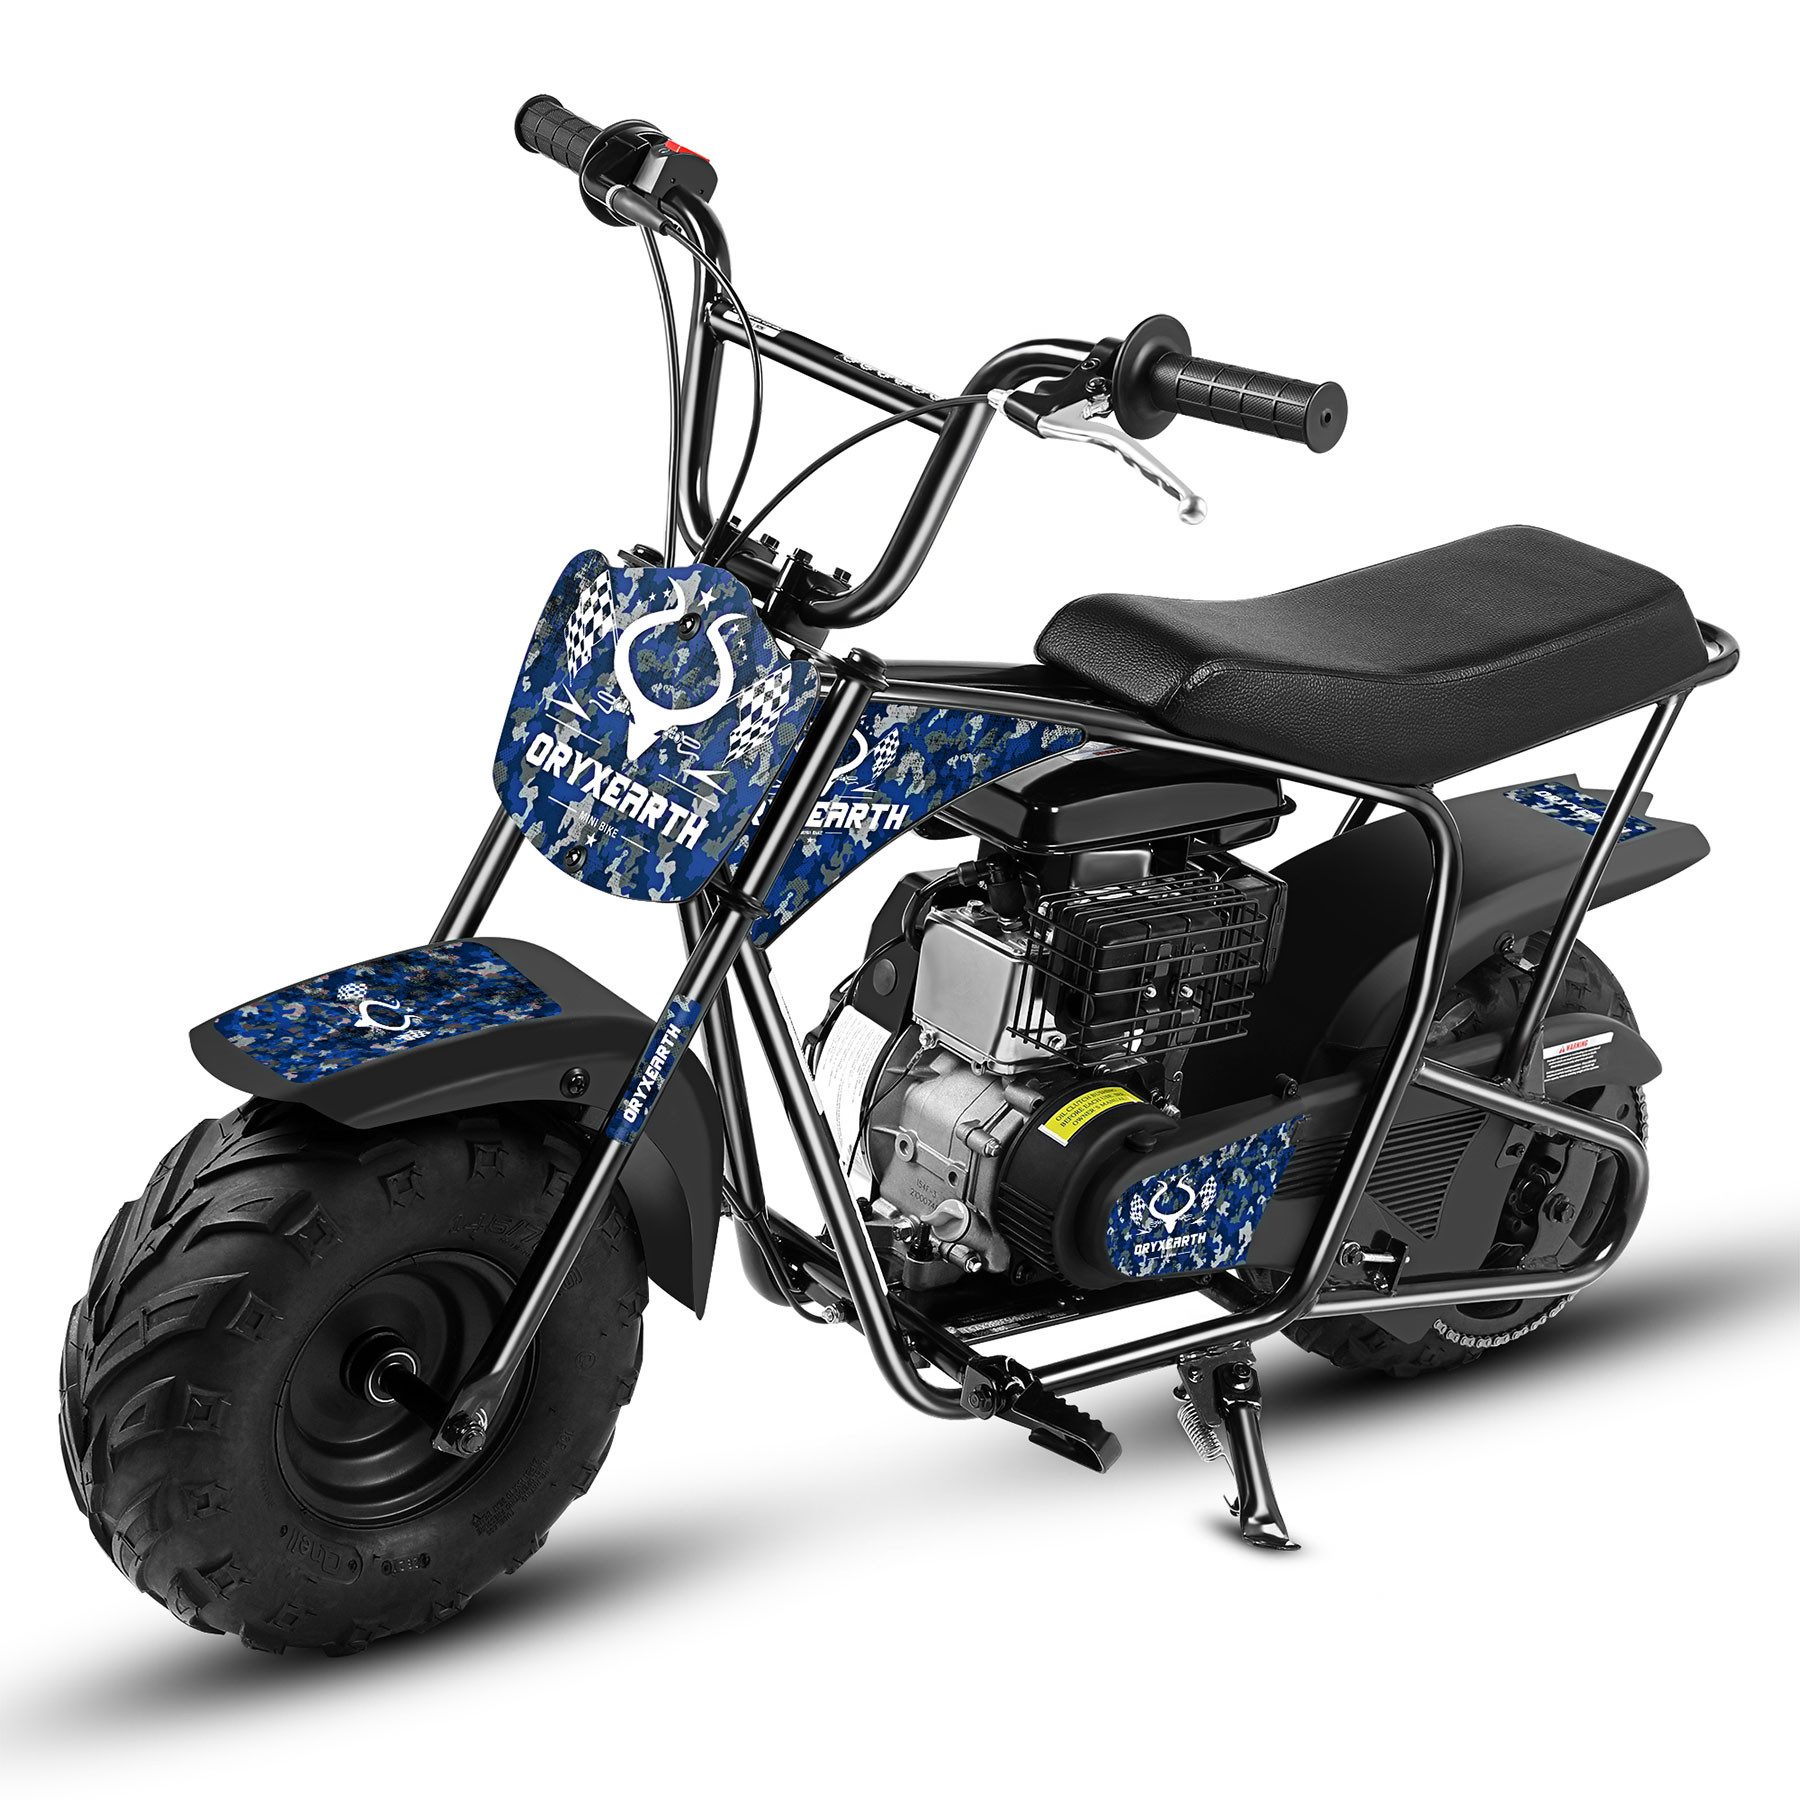 Oryxearth Dirt-Bike Pocket bike für Kinder Minicross 105cc Gasbetriebenes Offroad-Motorrad